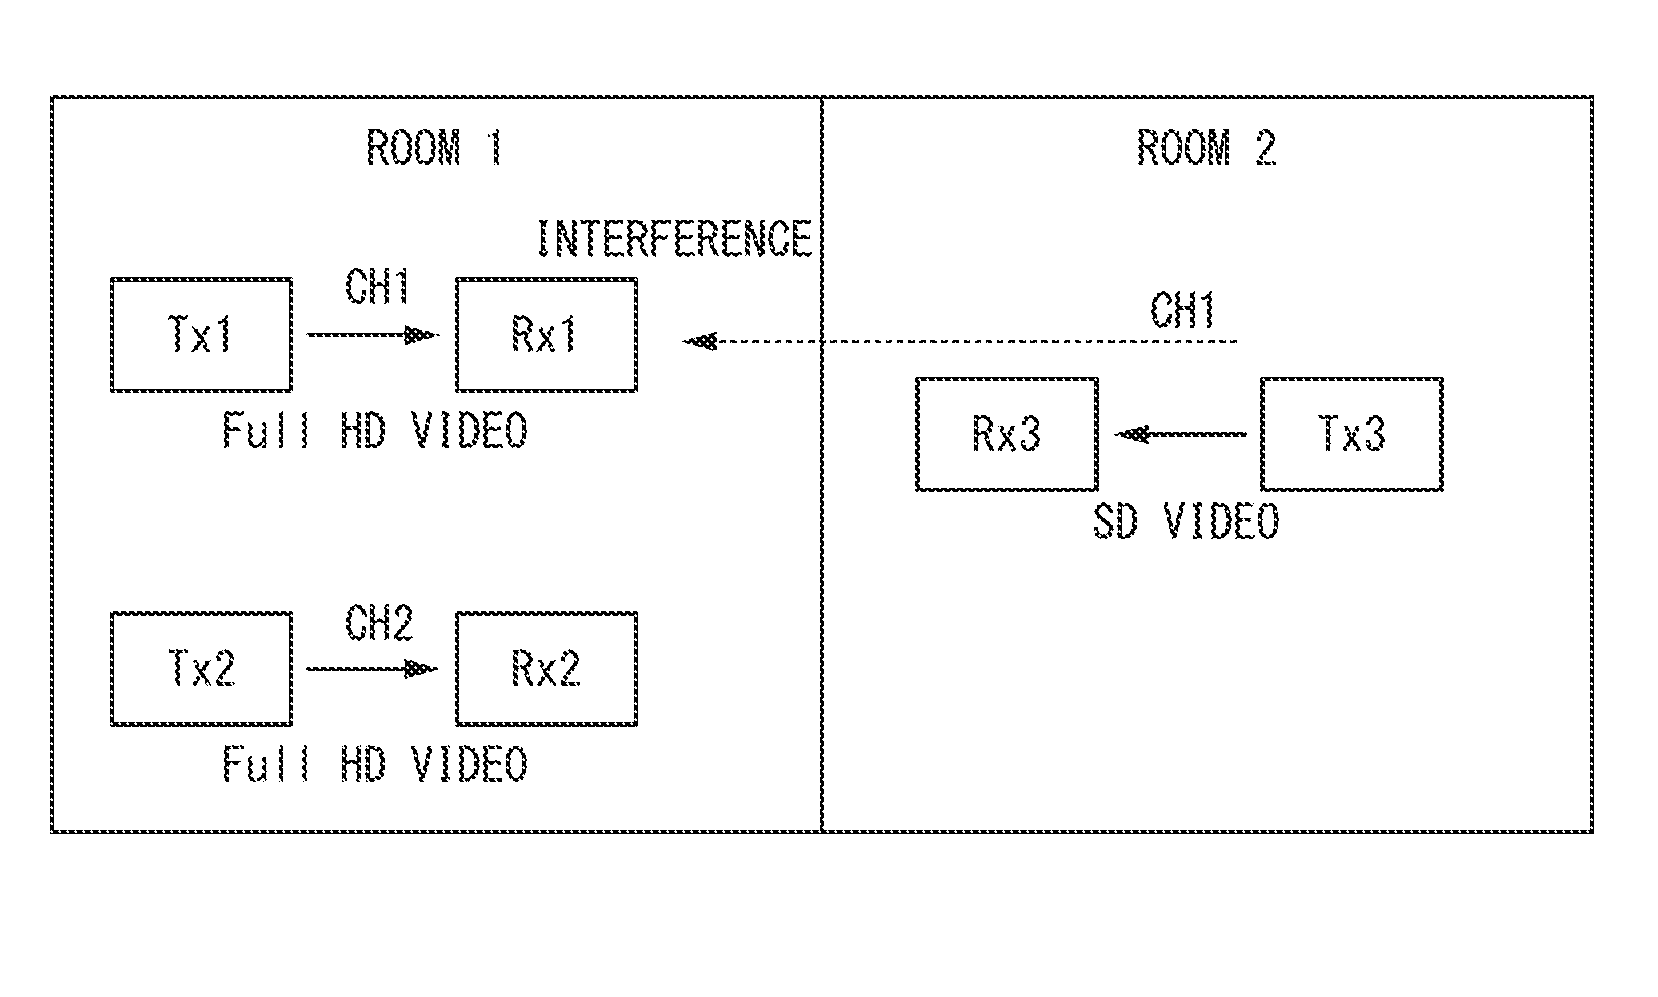 Video transmitter, video transmission method, and program device